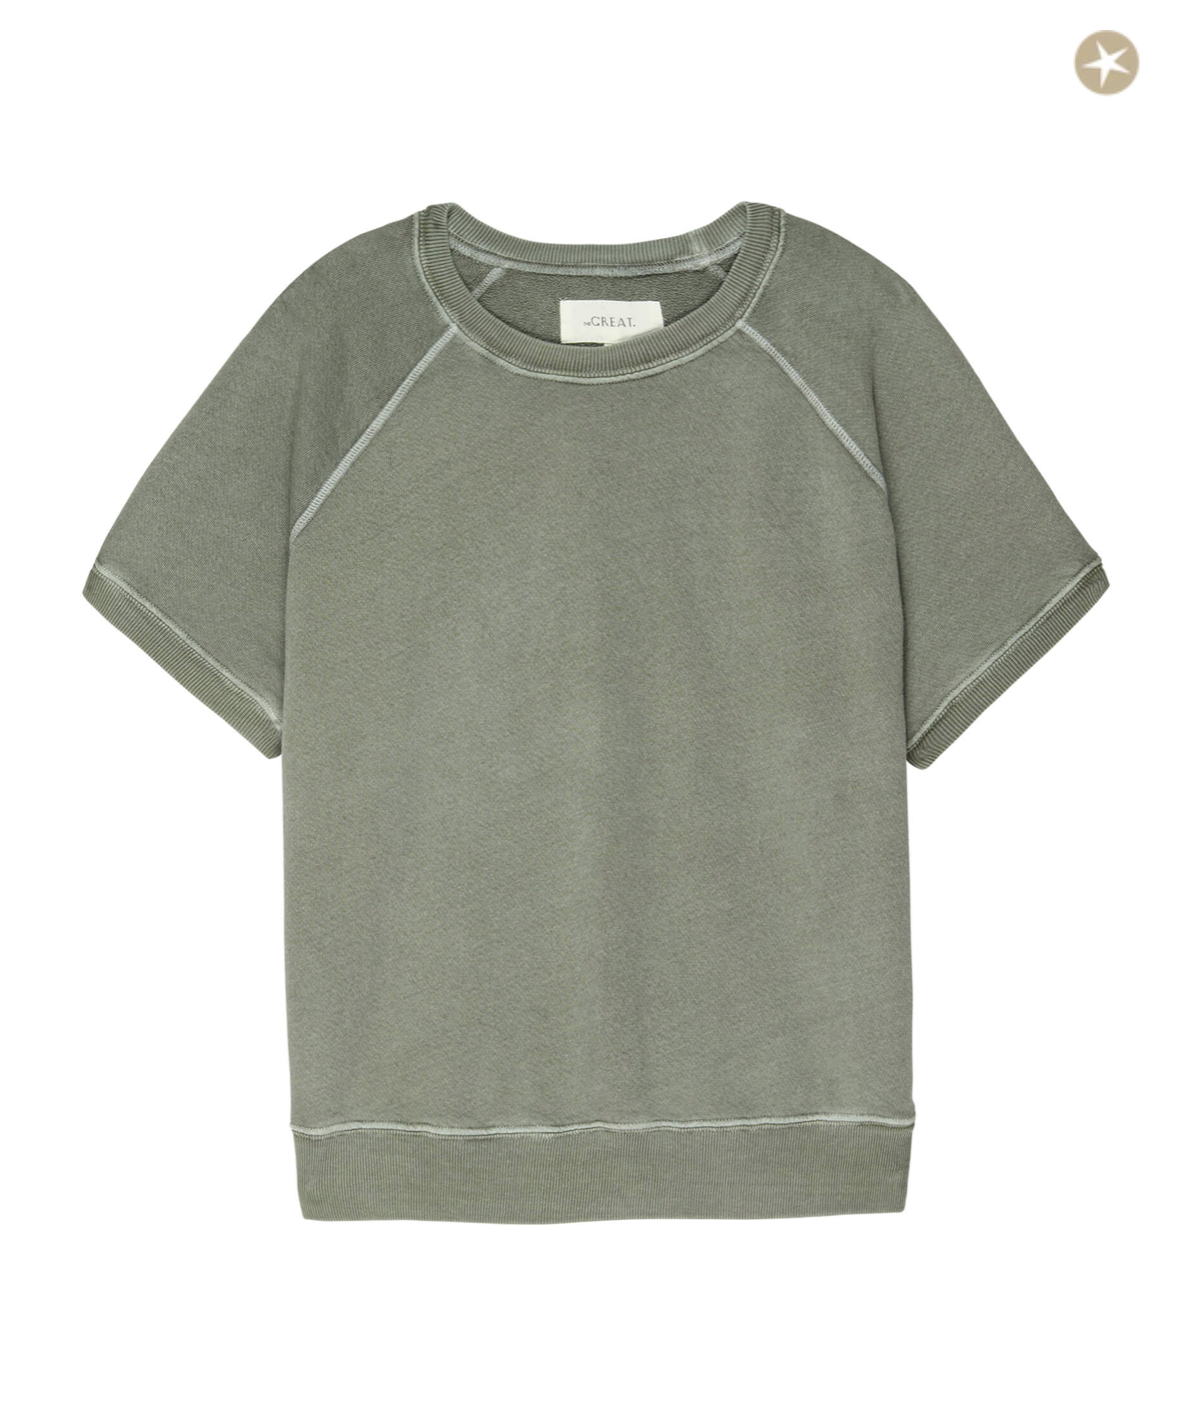 The Short Sleeve Sweatshirt. Sweetgrass